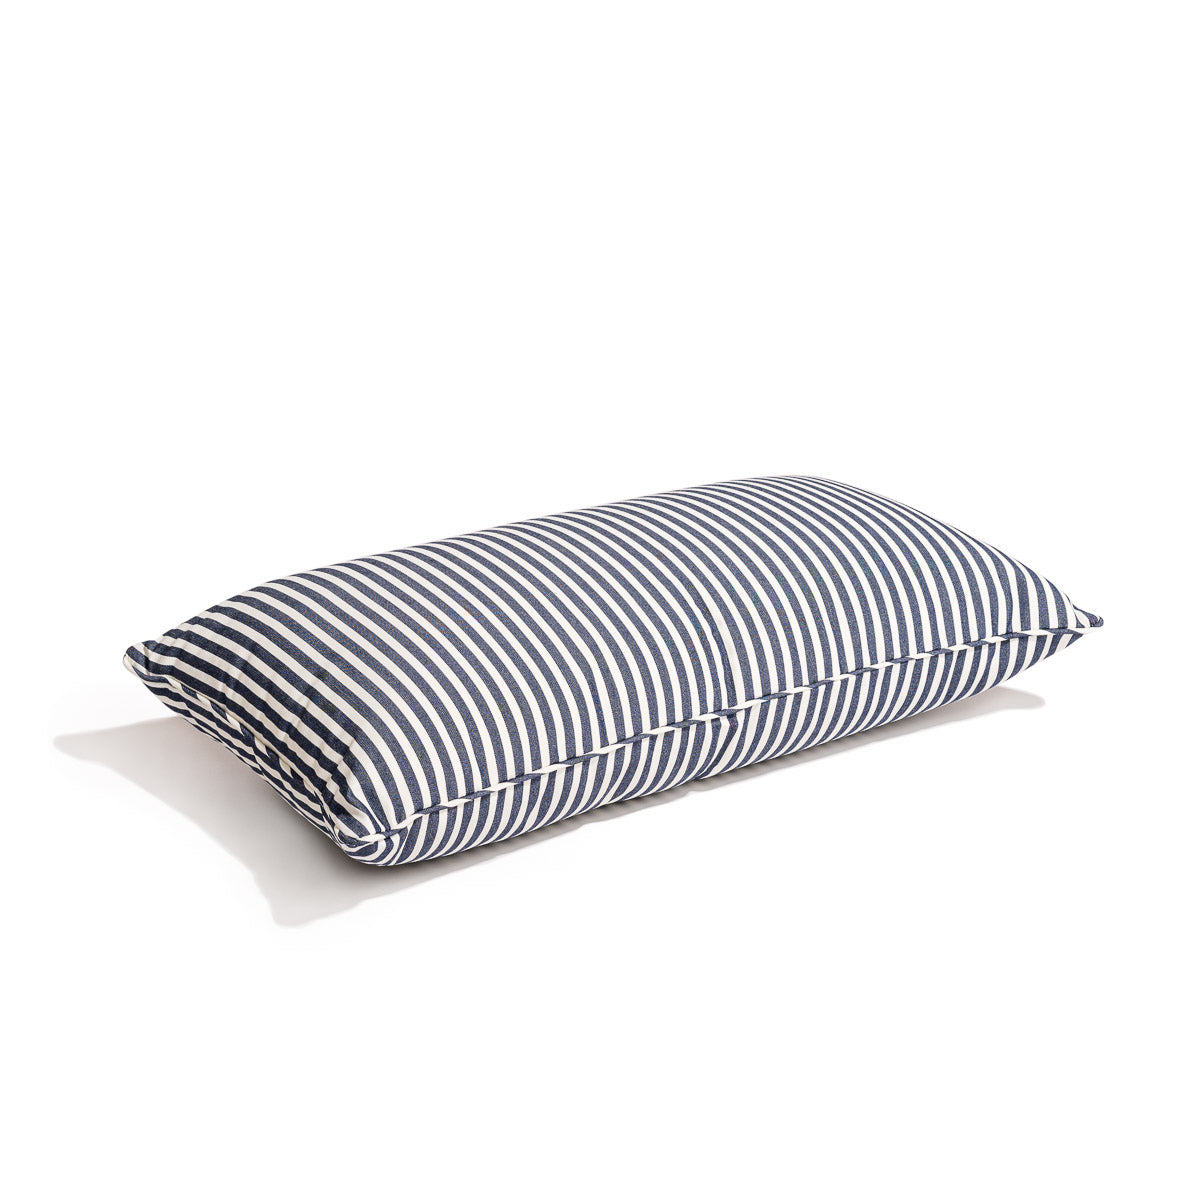 The Rectangle Throw Pillow - Lauren's Navy Stripe